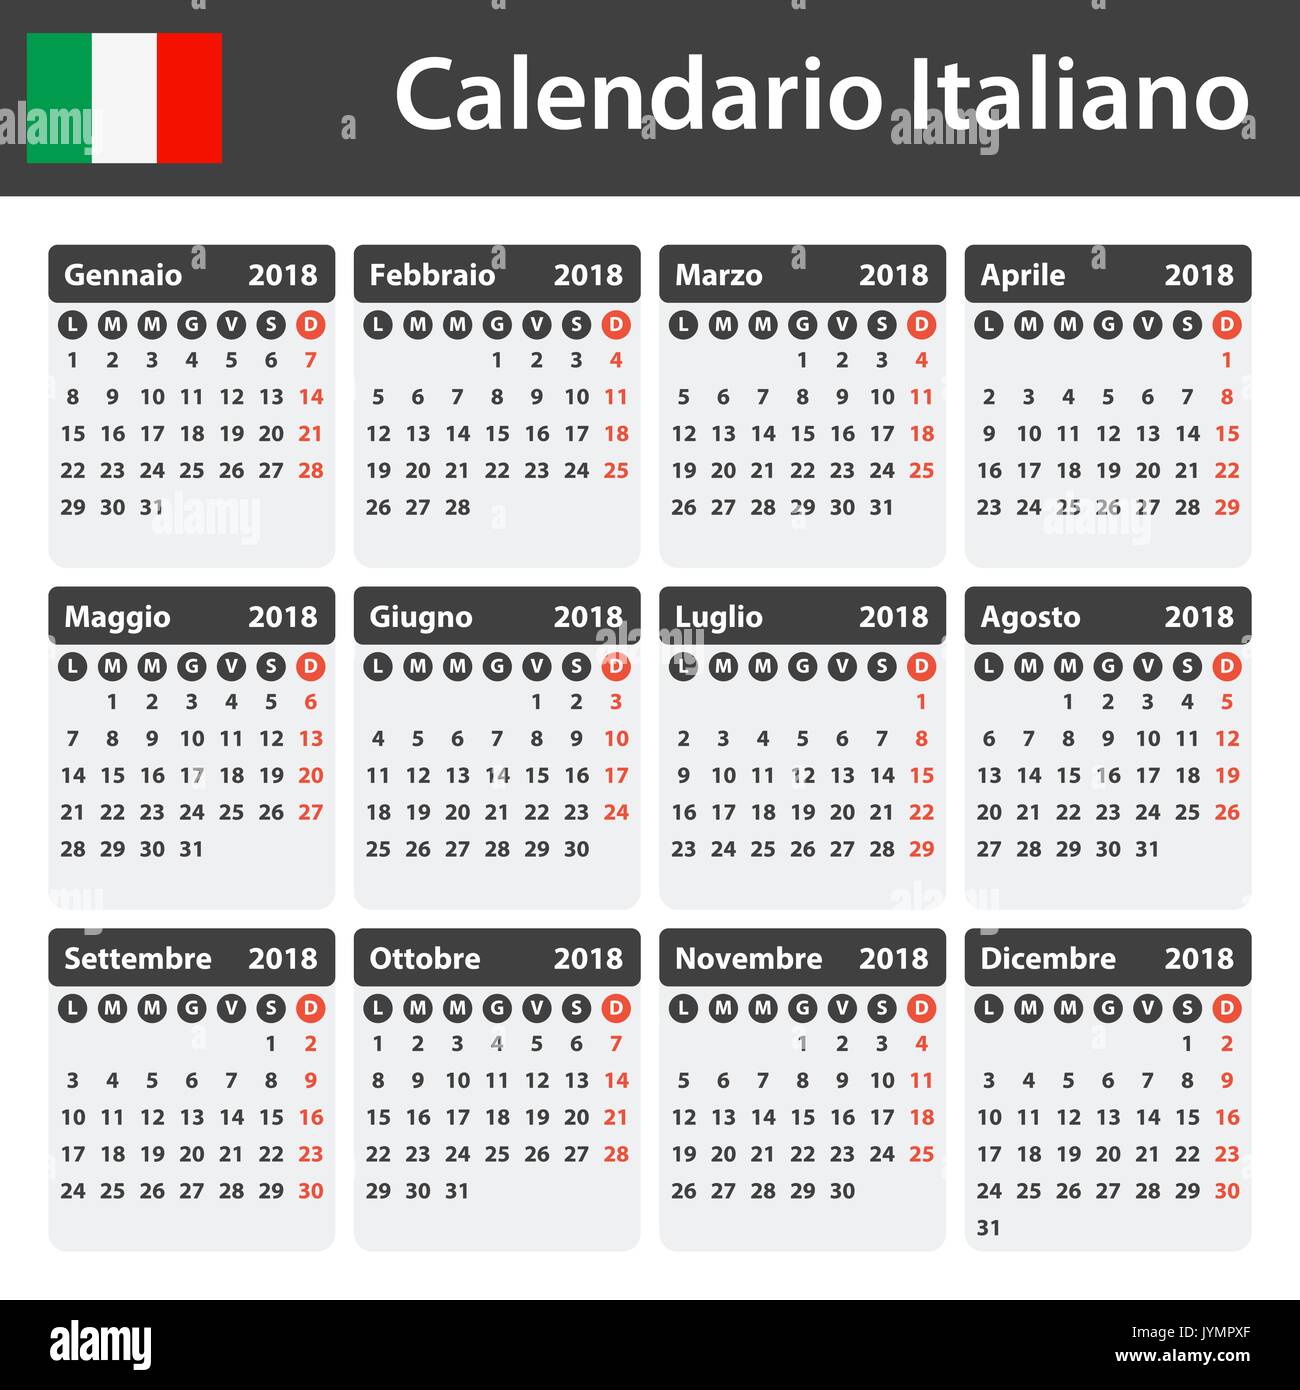 italian-calendar-for-2018-scheduler-agenda-or-diary-template-week